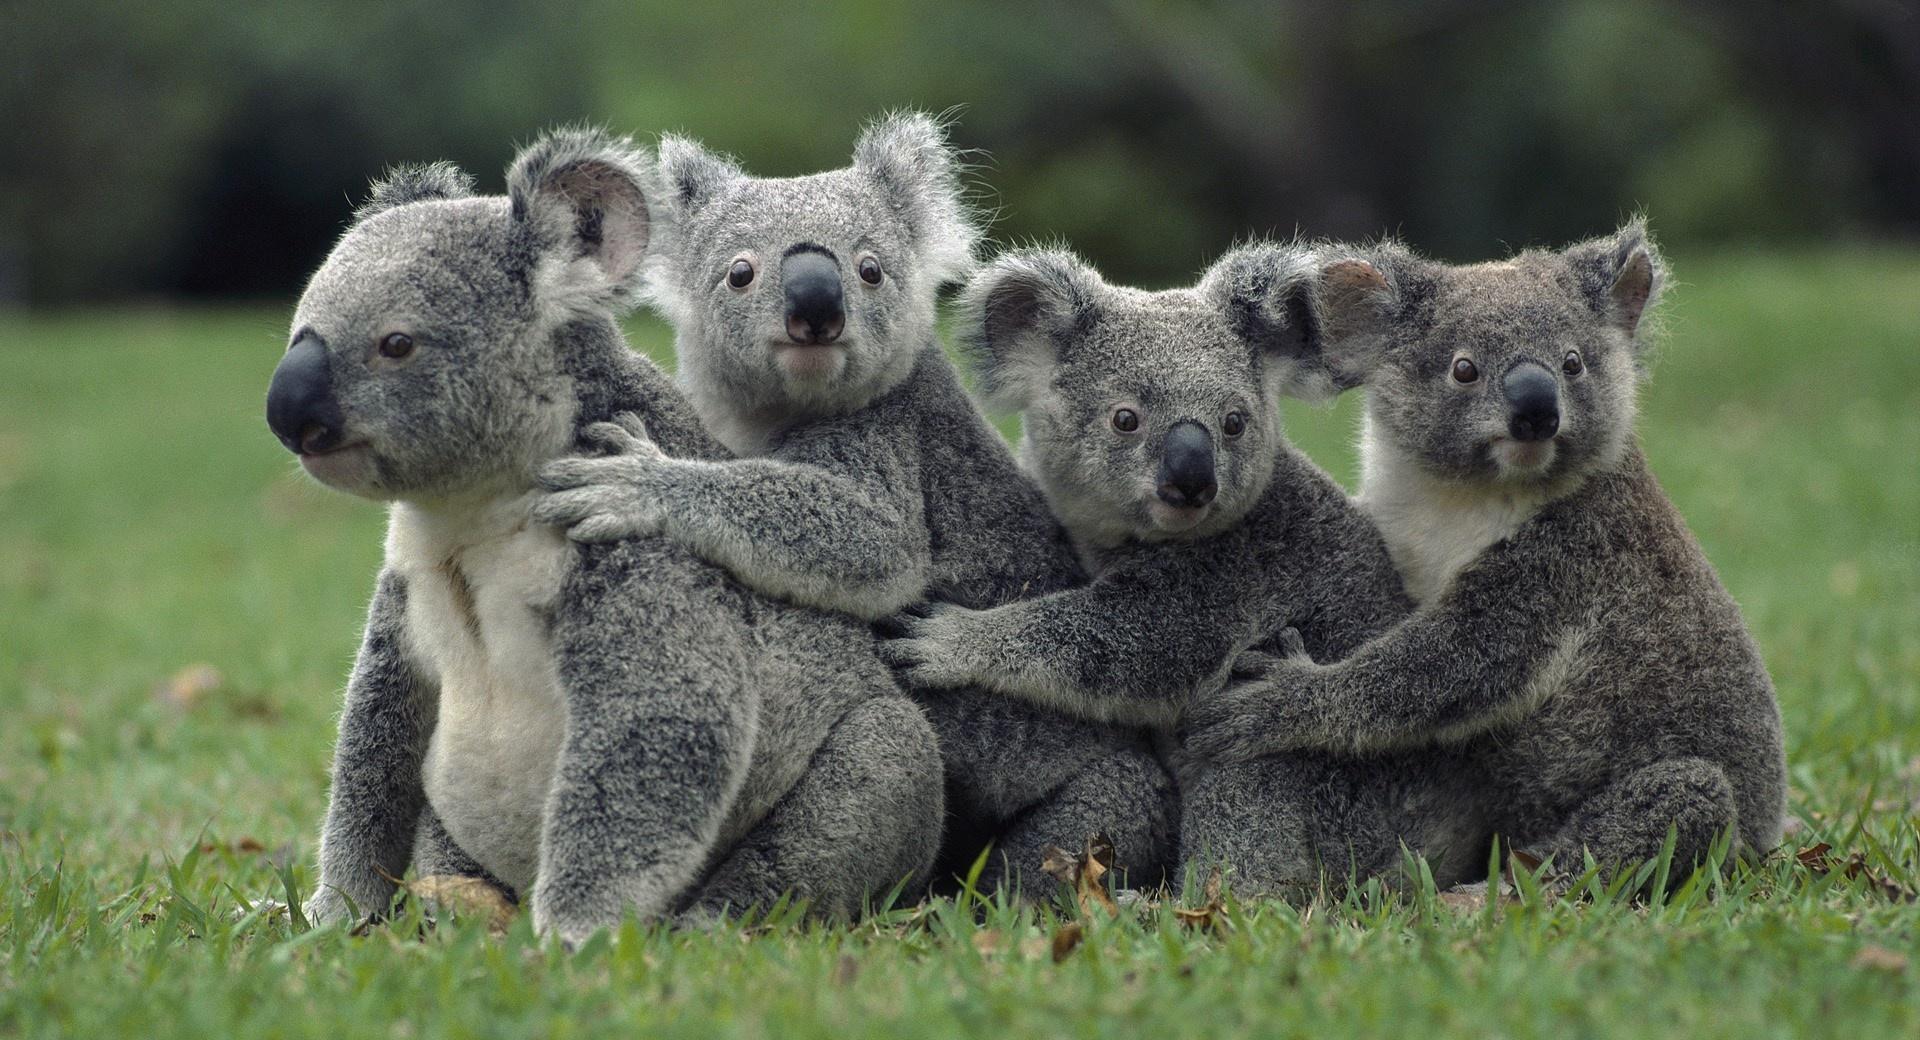 Funny Cute Koalas wallpapers HD quality